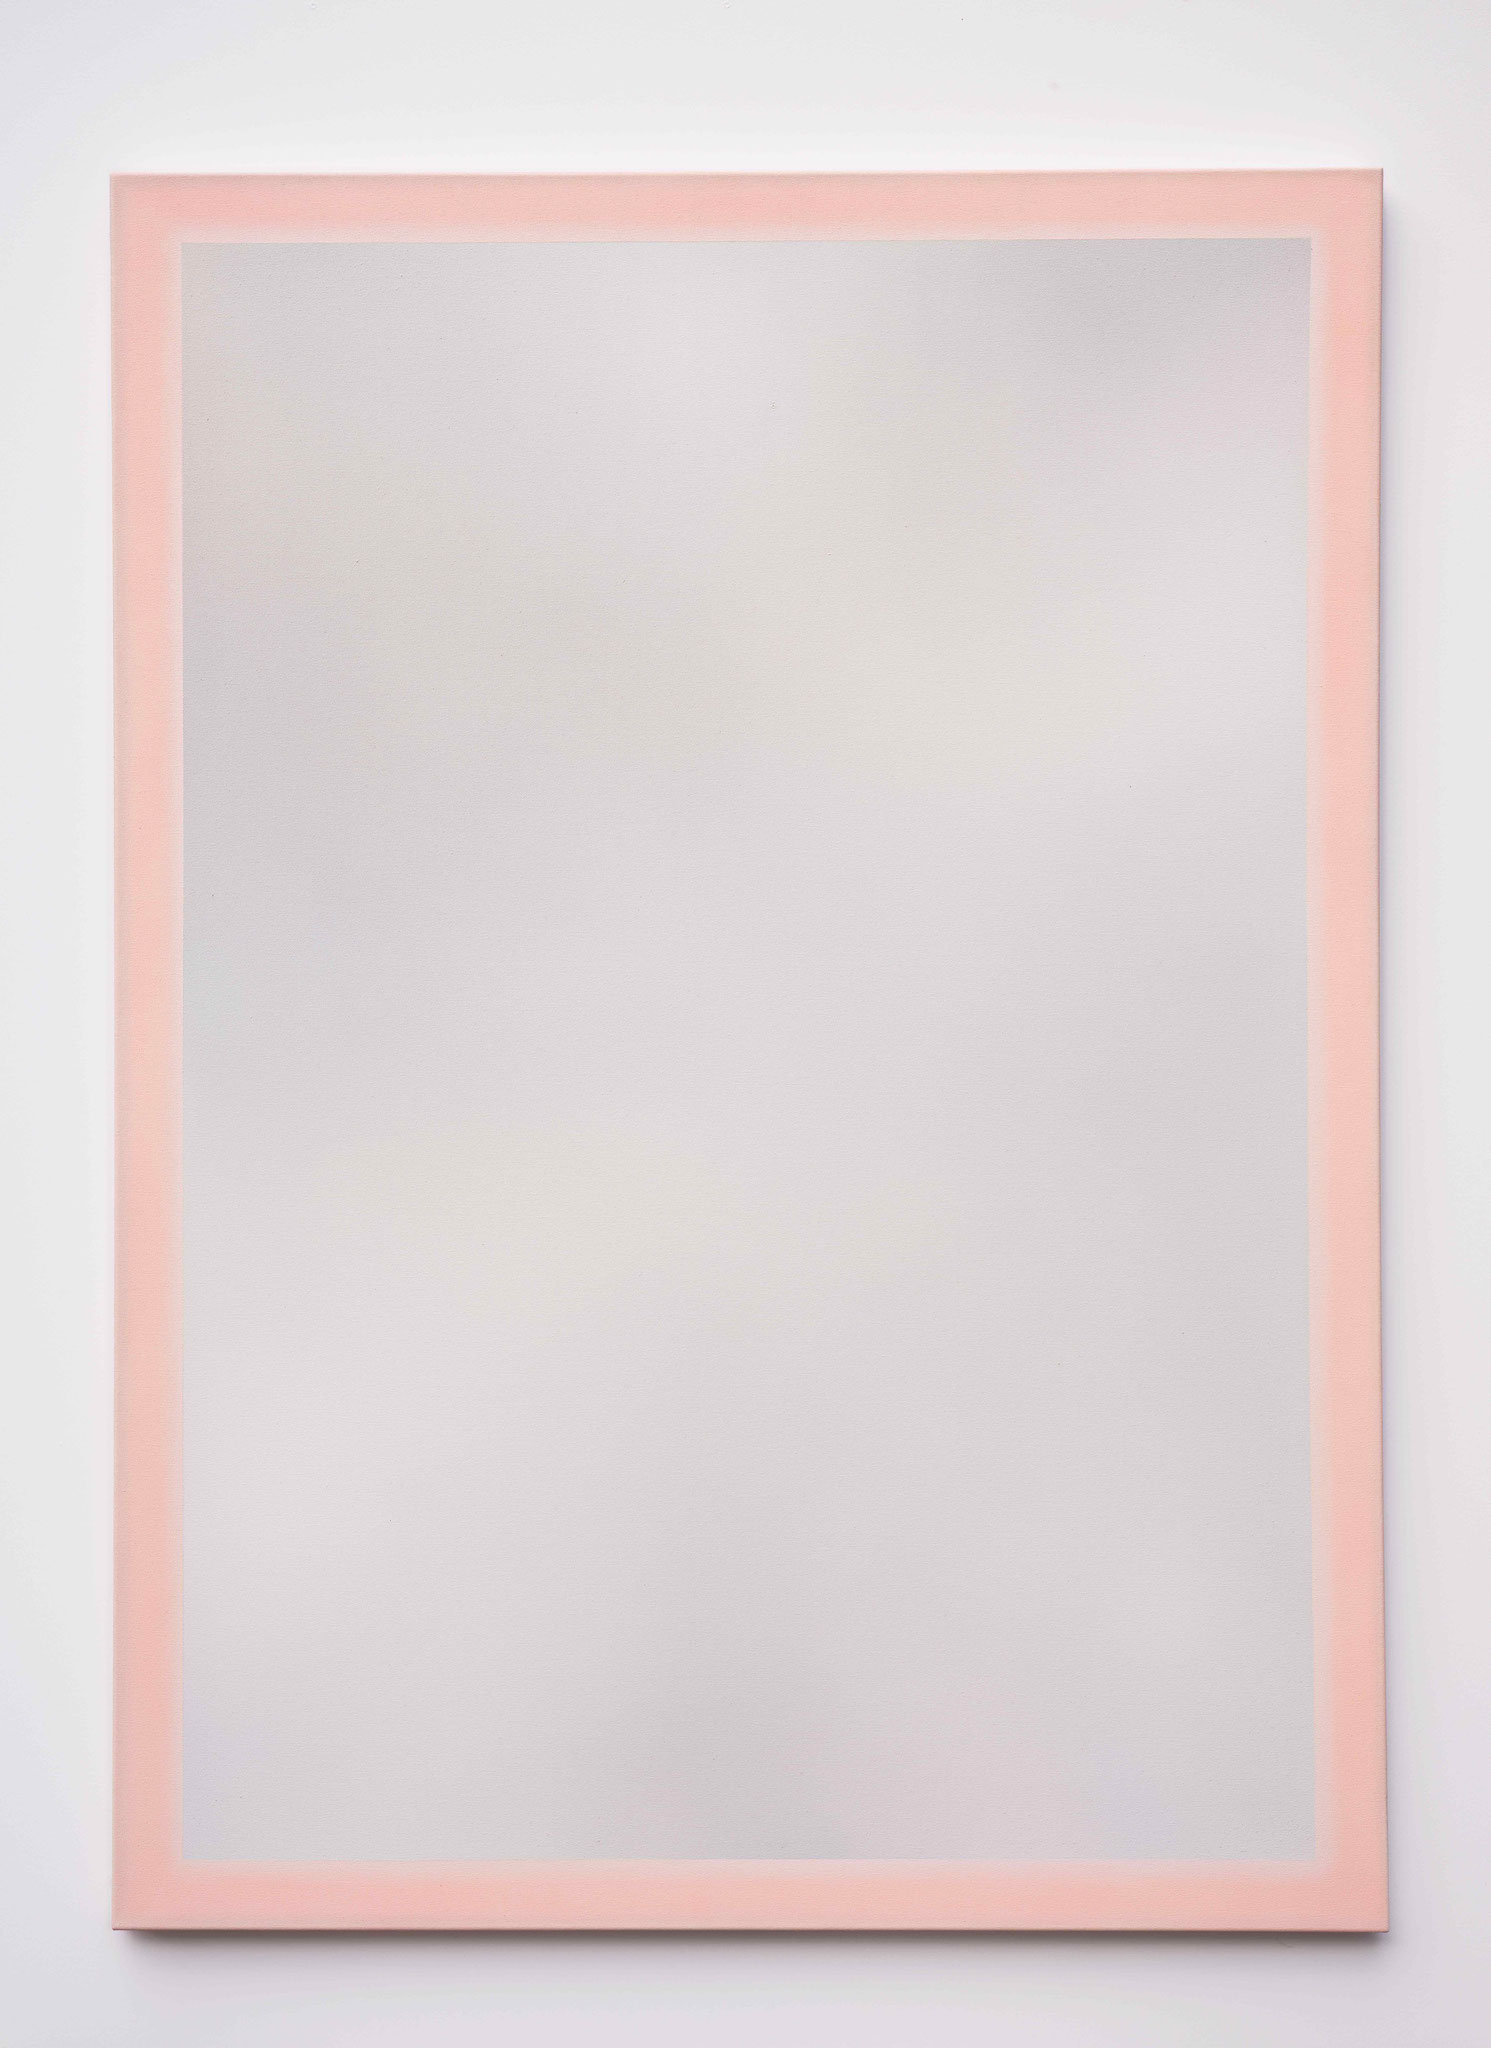 Alina Birkner "Untitled (Albedo)" 2019, 180x130 cm, Acrylic on Canvas